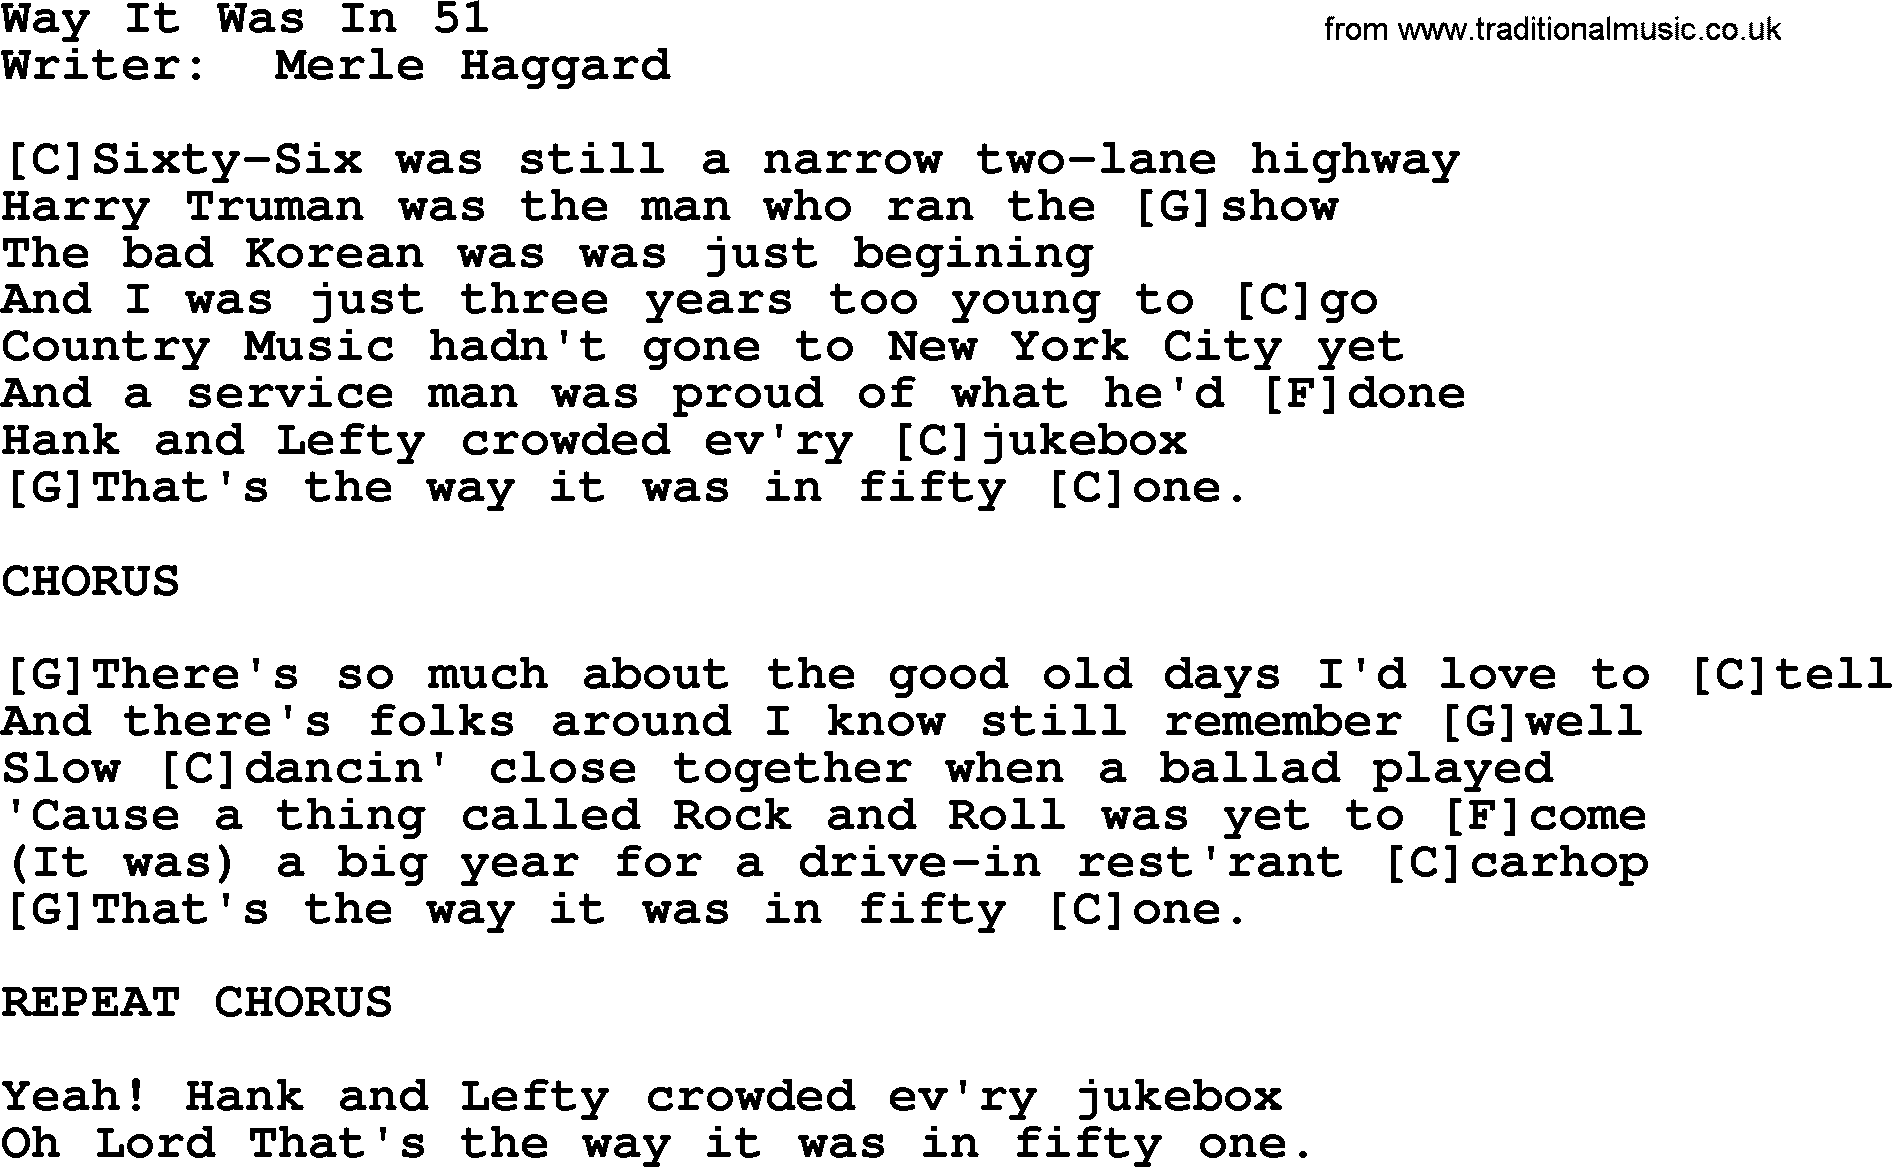 Merle Haggard song: Way It Was In 51, lyrics and chords